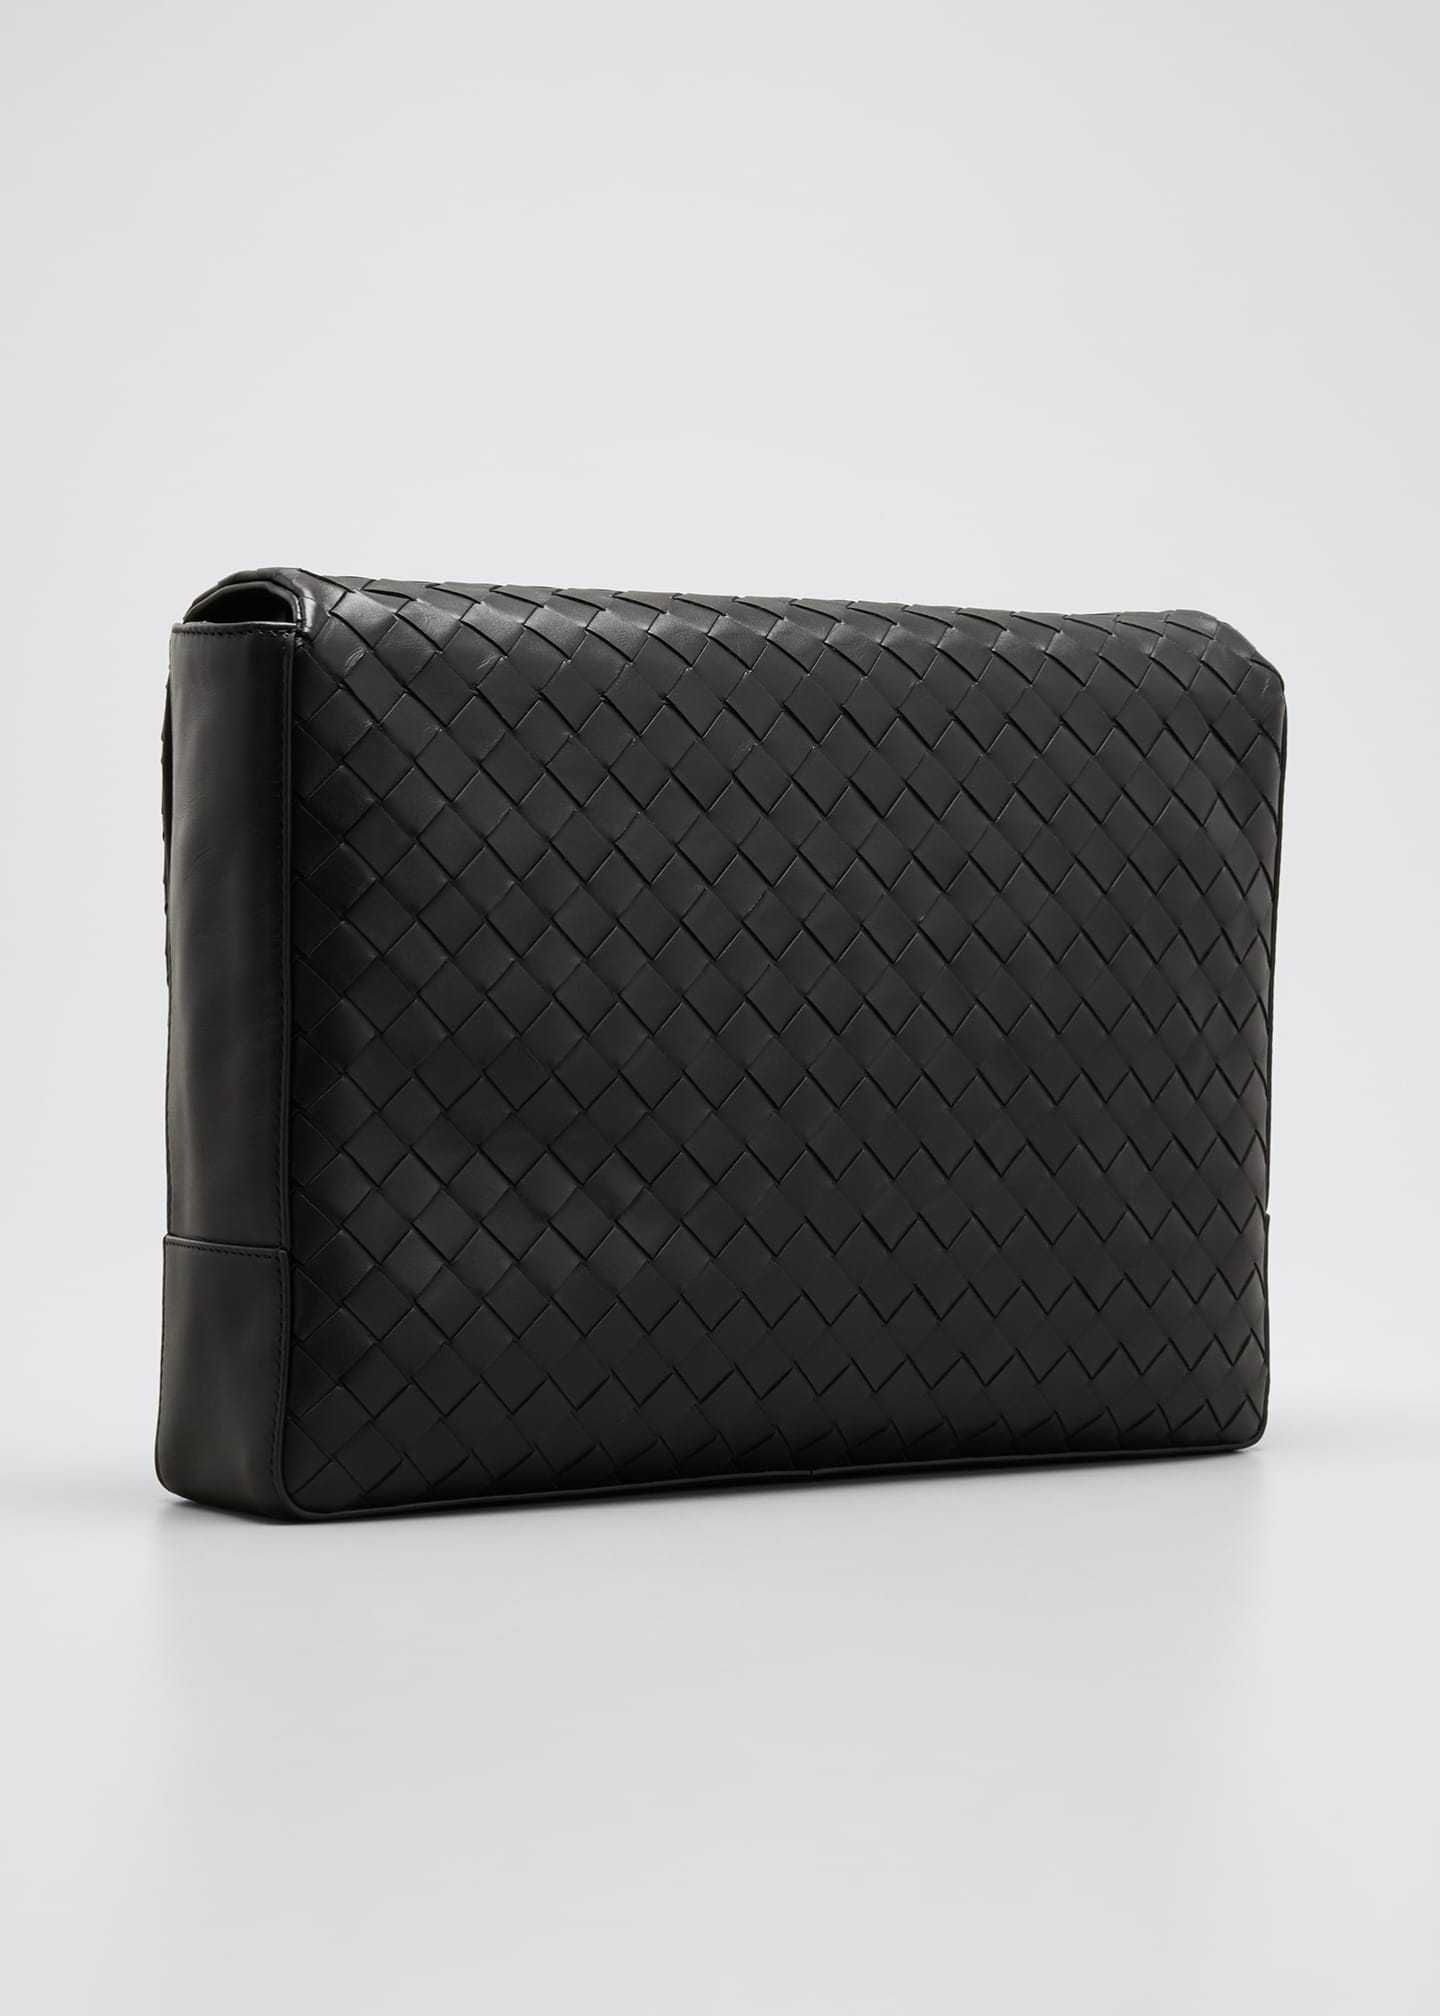 Bottega Veneta Men's Borsa Medium Woven Leather Crossbody Bag ...